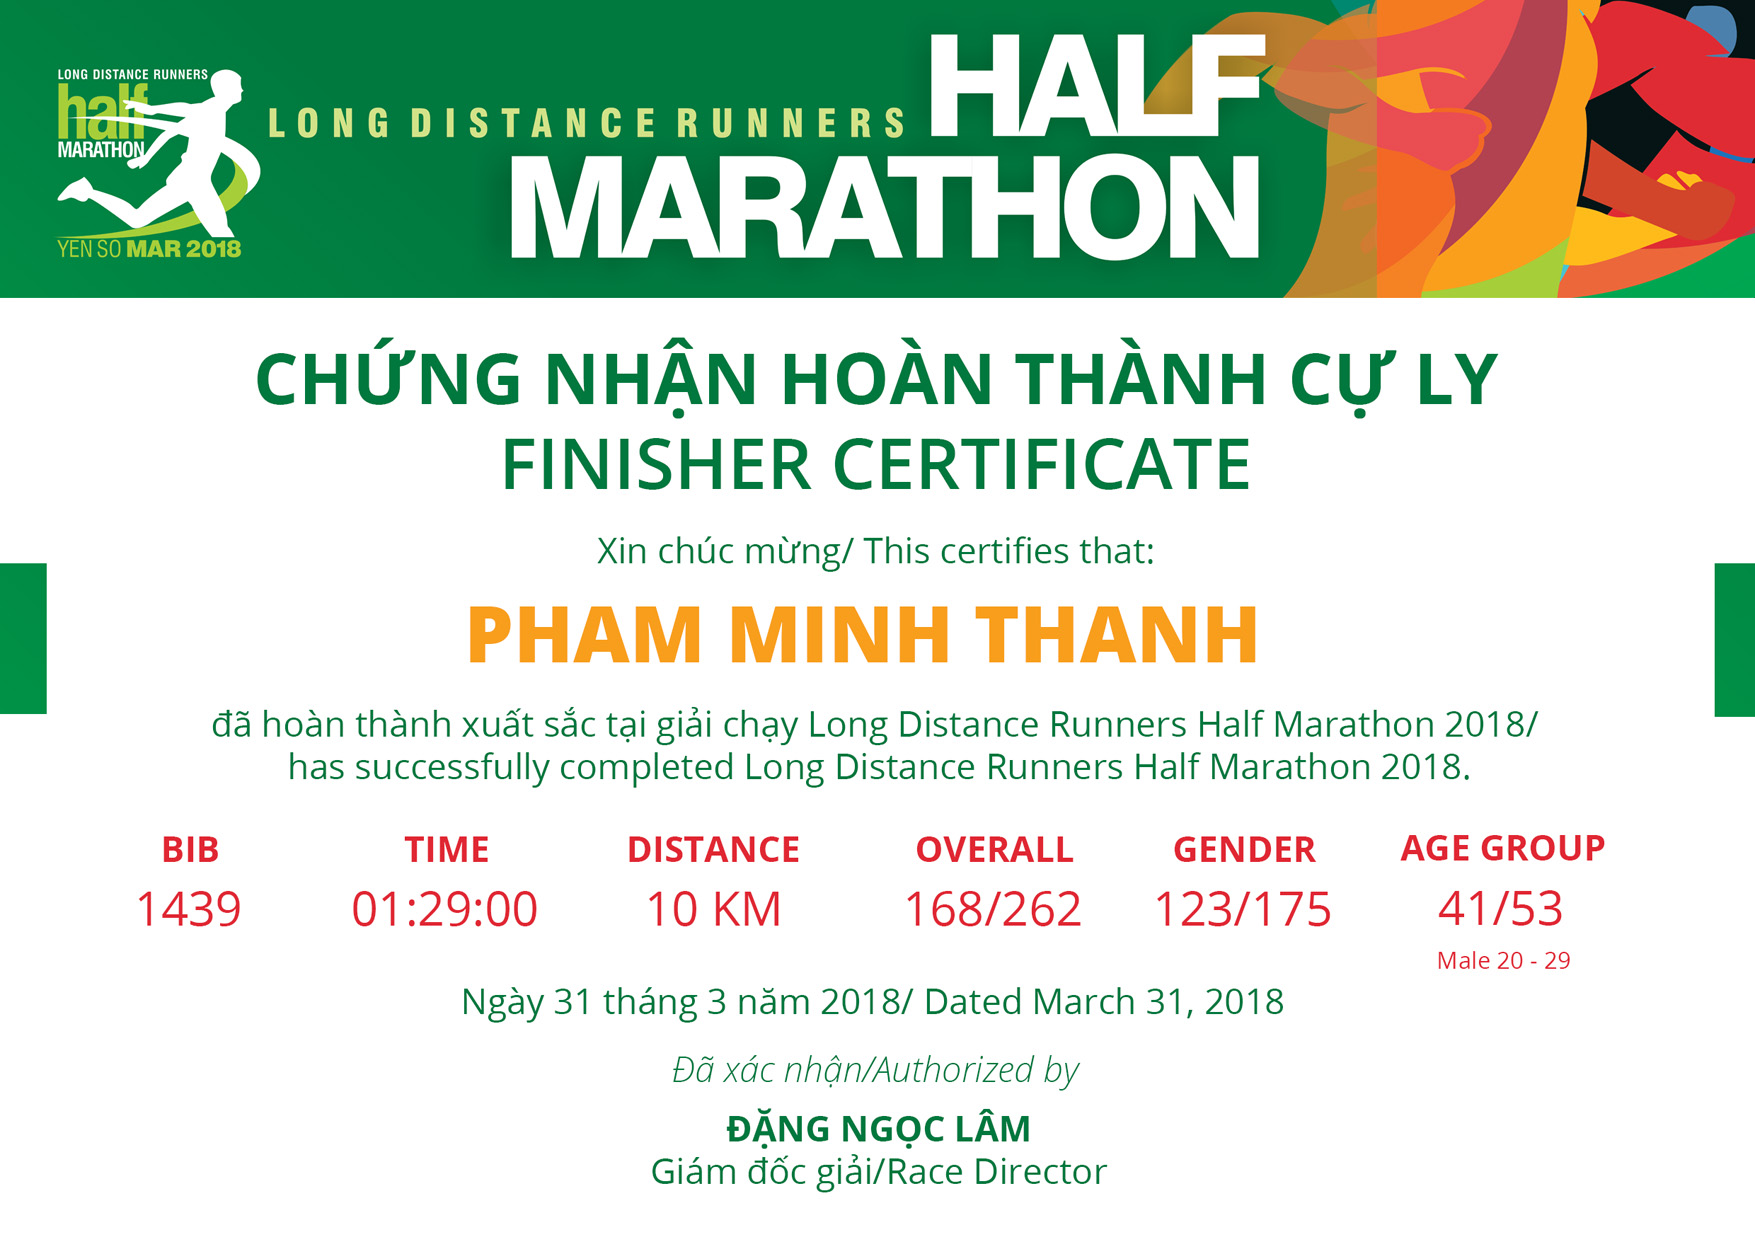 1439 - Pham Minh Thanh